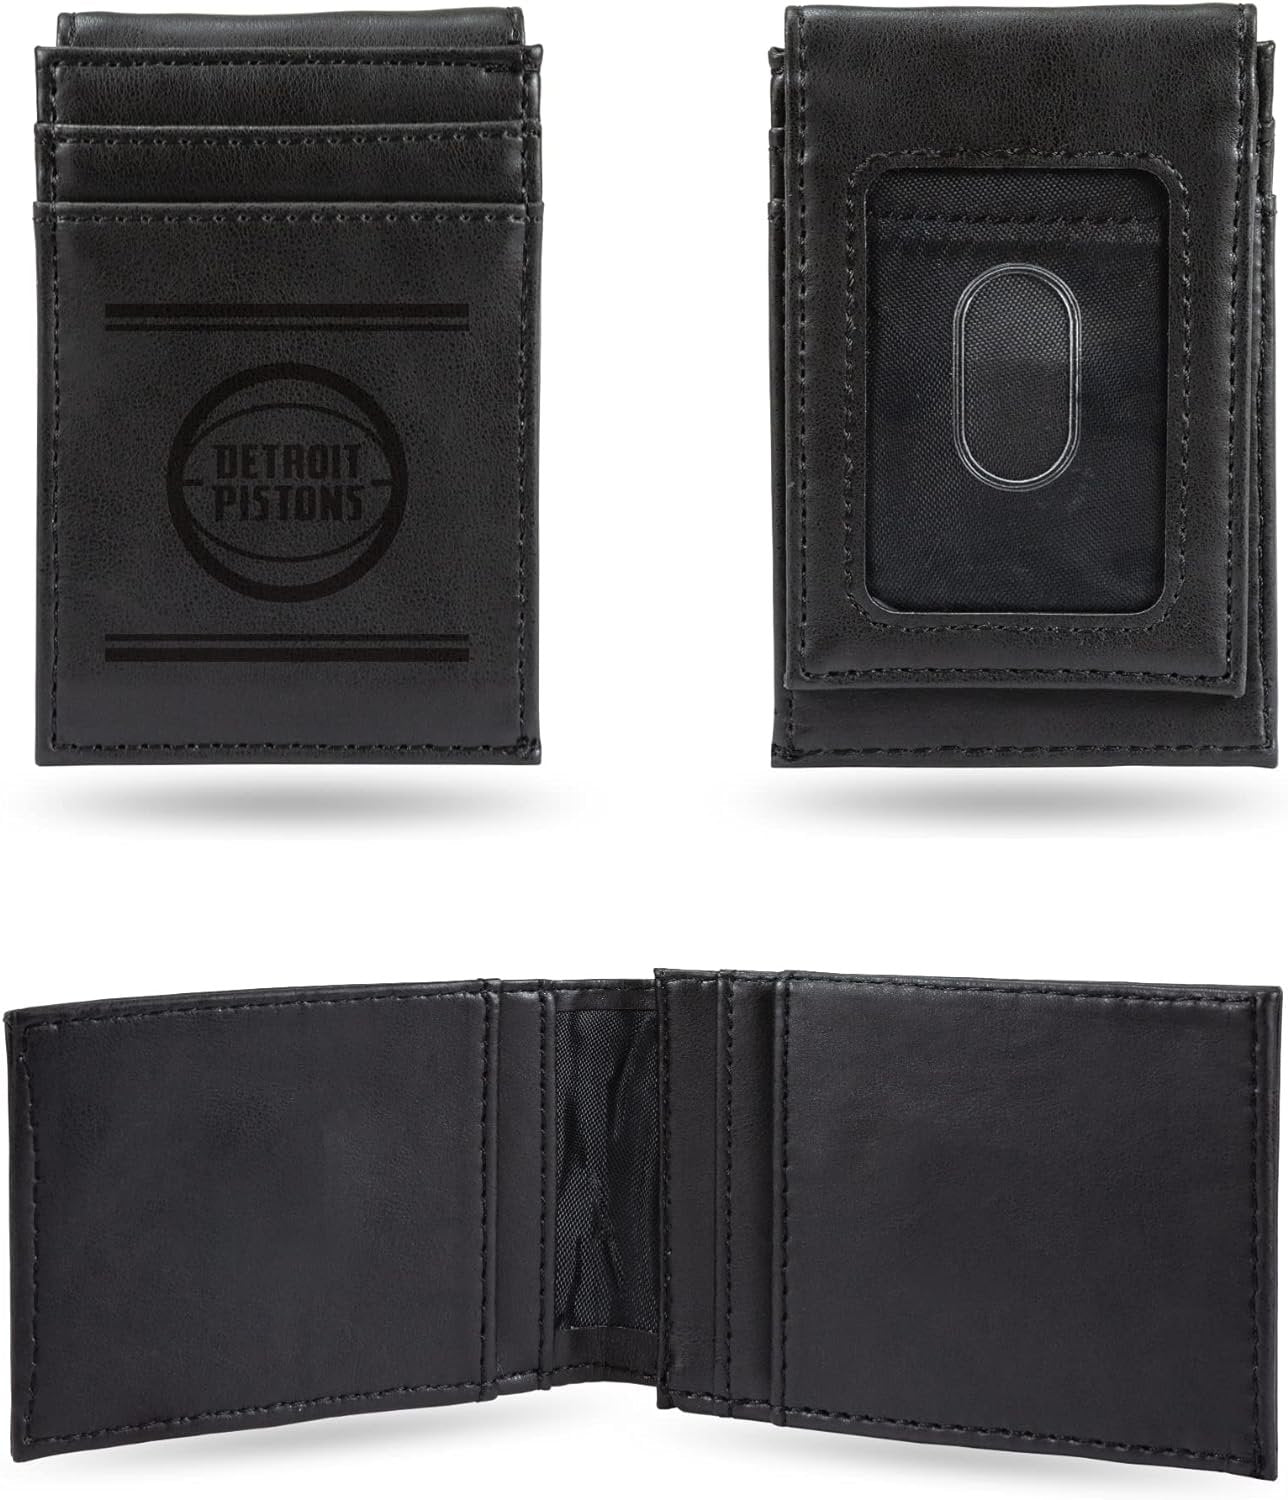 Detroit Pistons Premium Black Leather Wallet, Front Pocket Magnetic Money Clip, Laser Engraved, Vegan